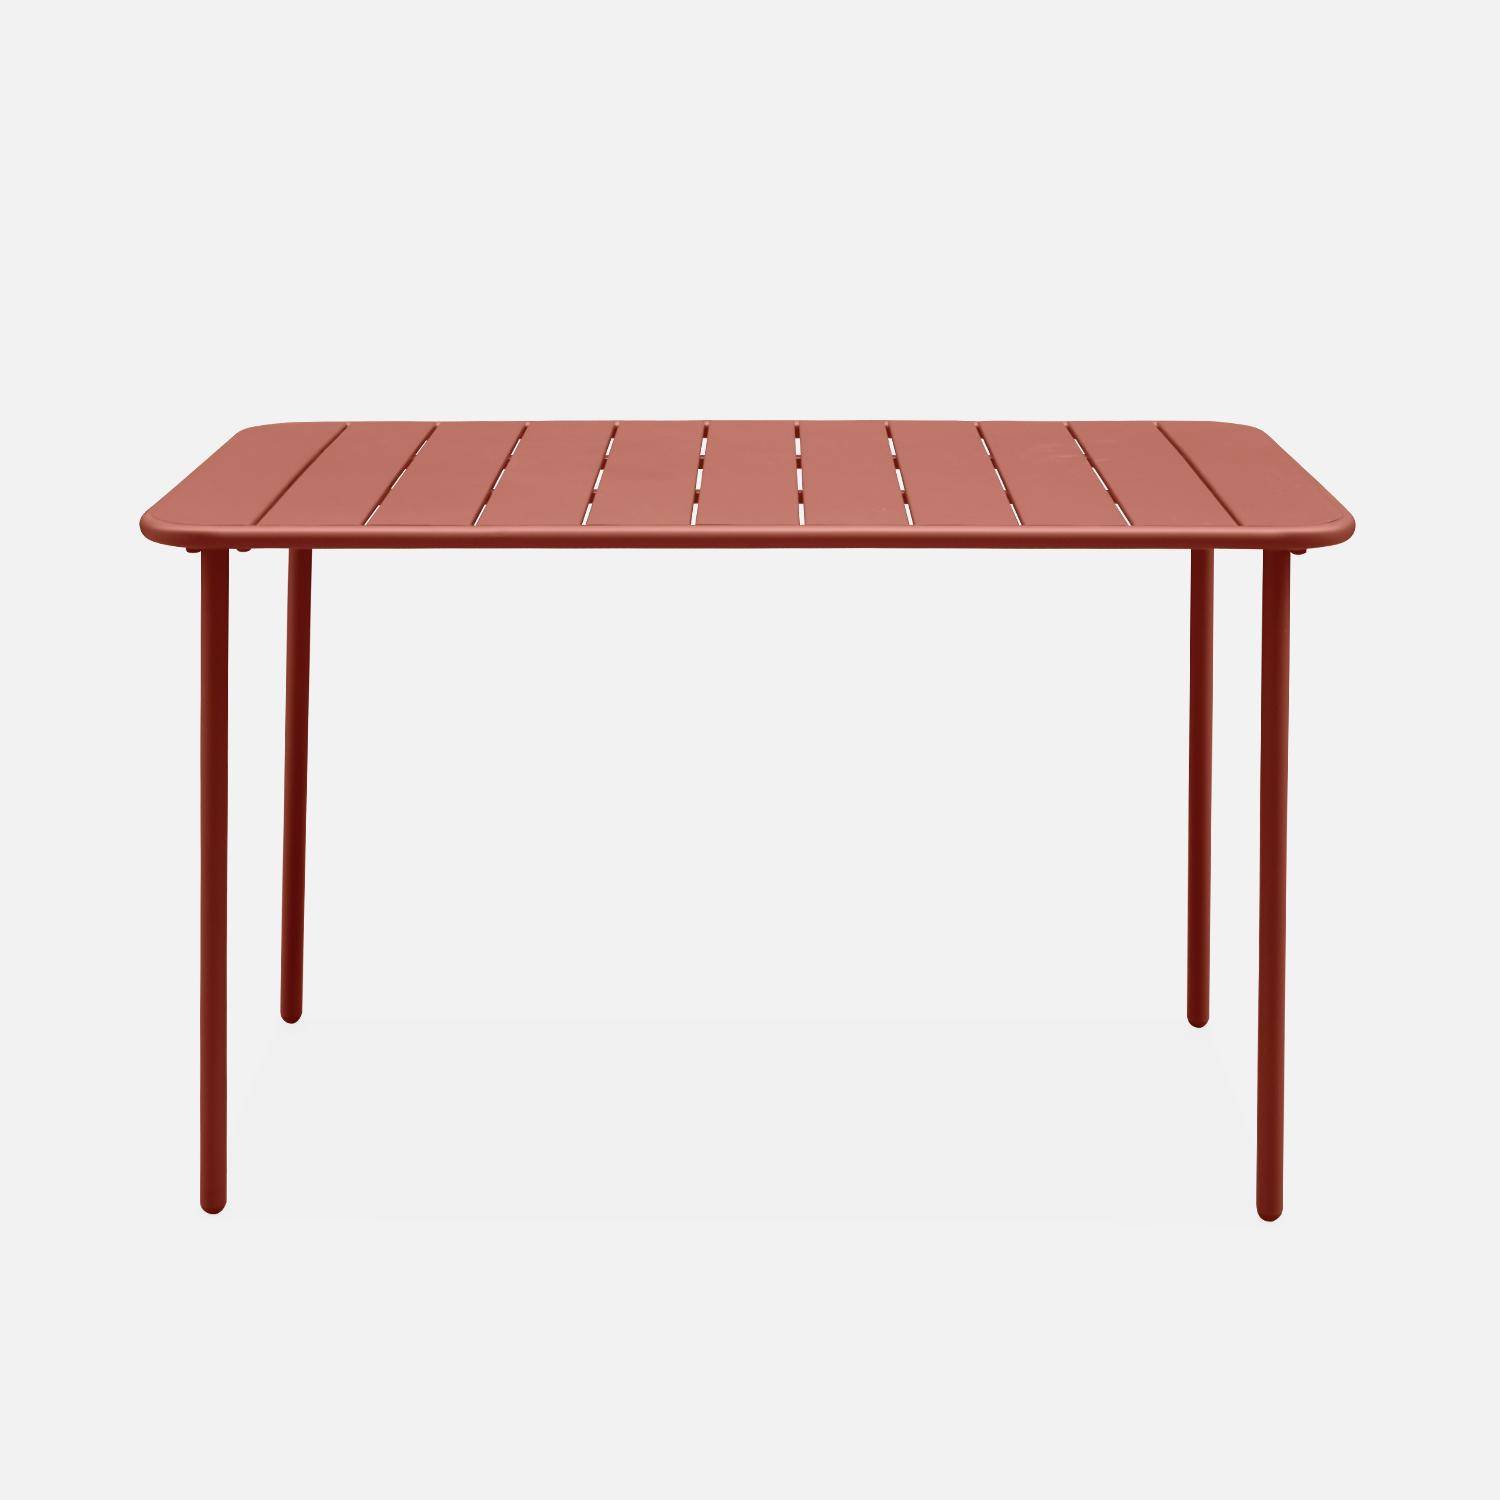 4-seater rectangular steel garden table, 120x70cm - Amelia - Terracotta Photo5